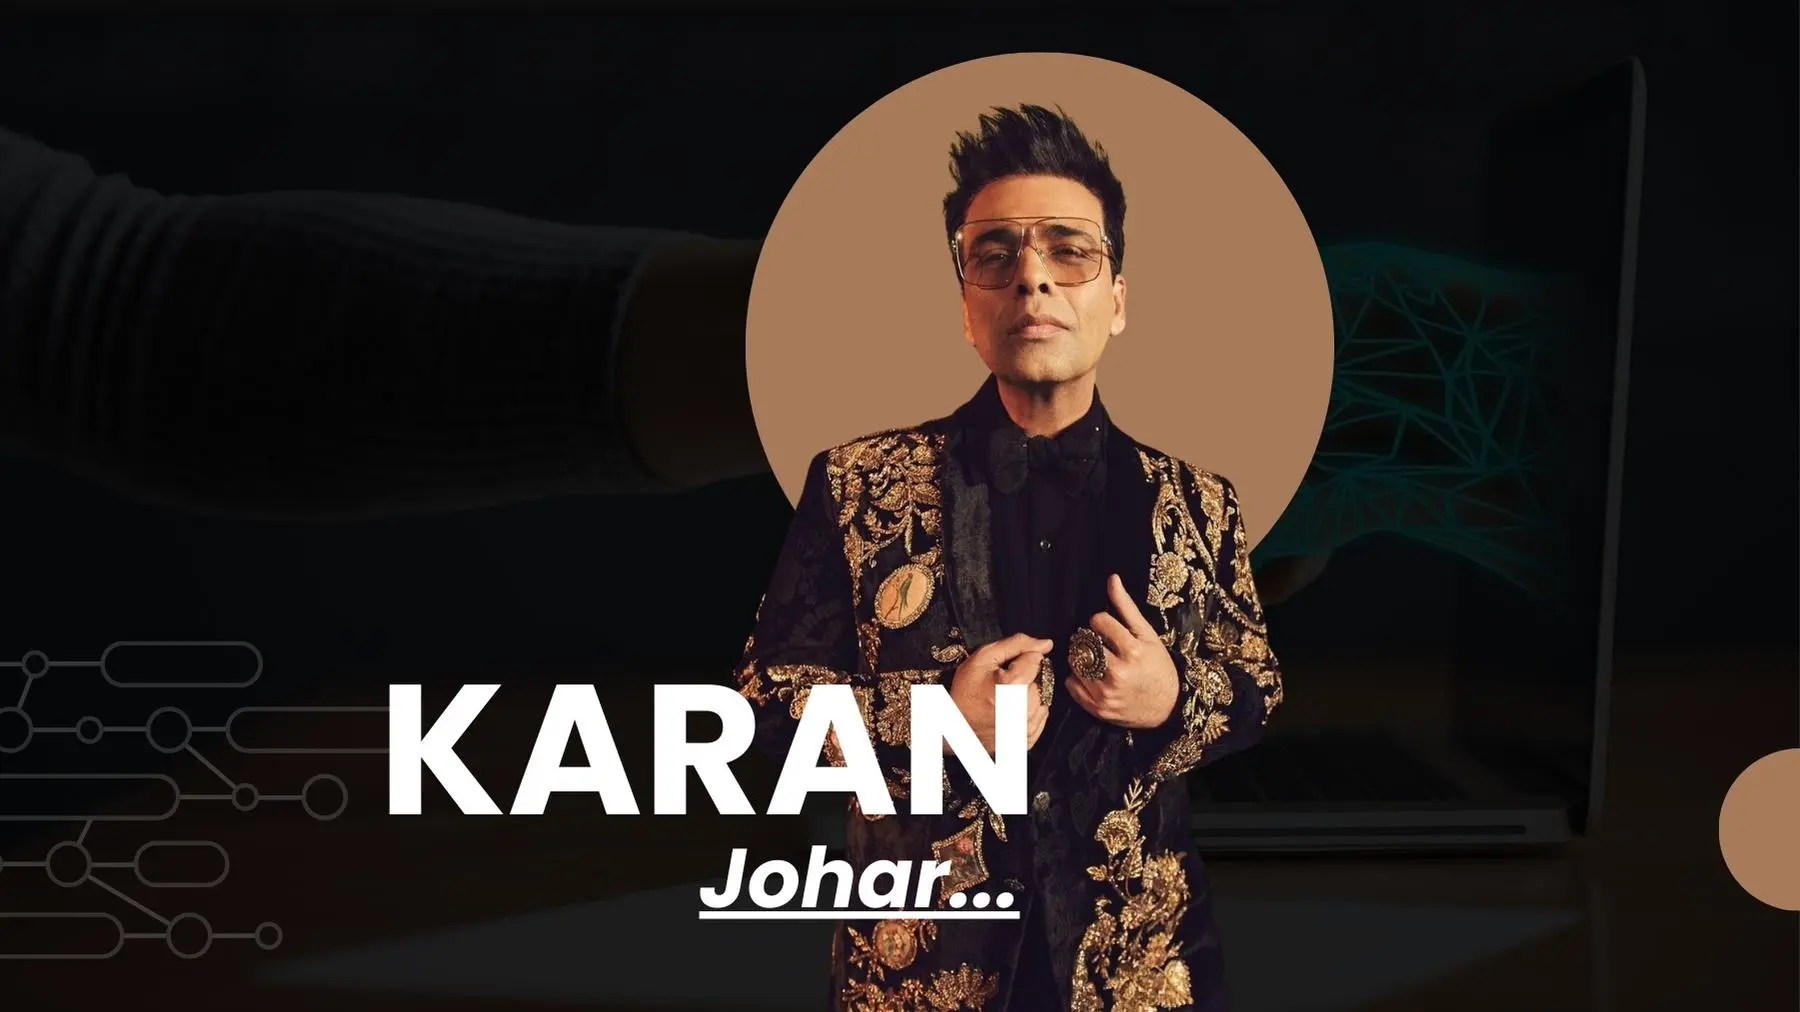 Karan Johar Net worth and Biography